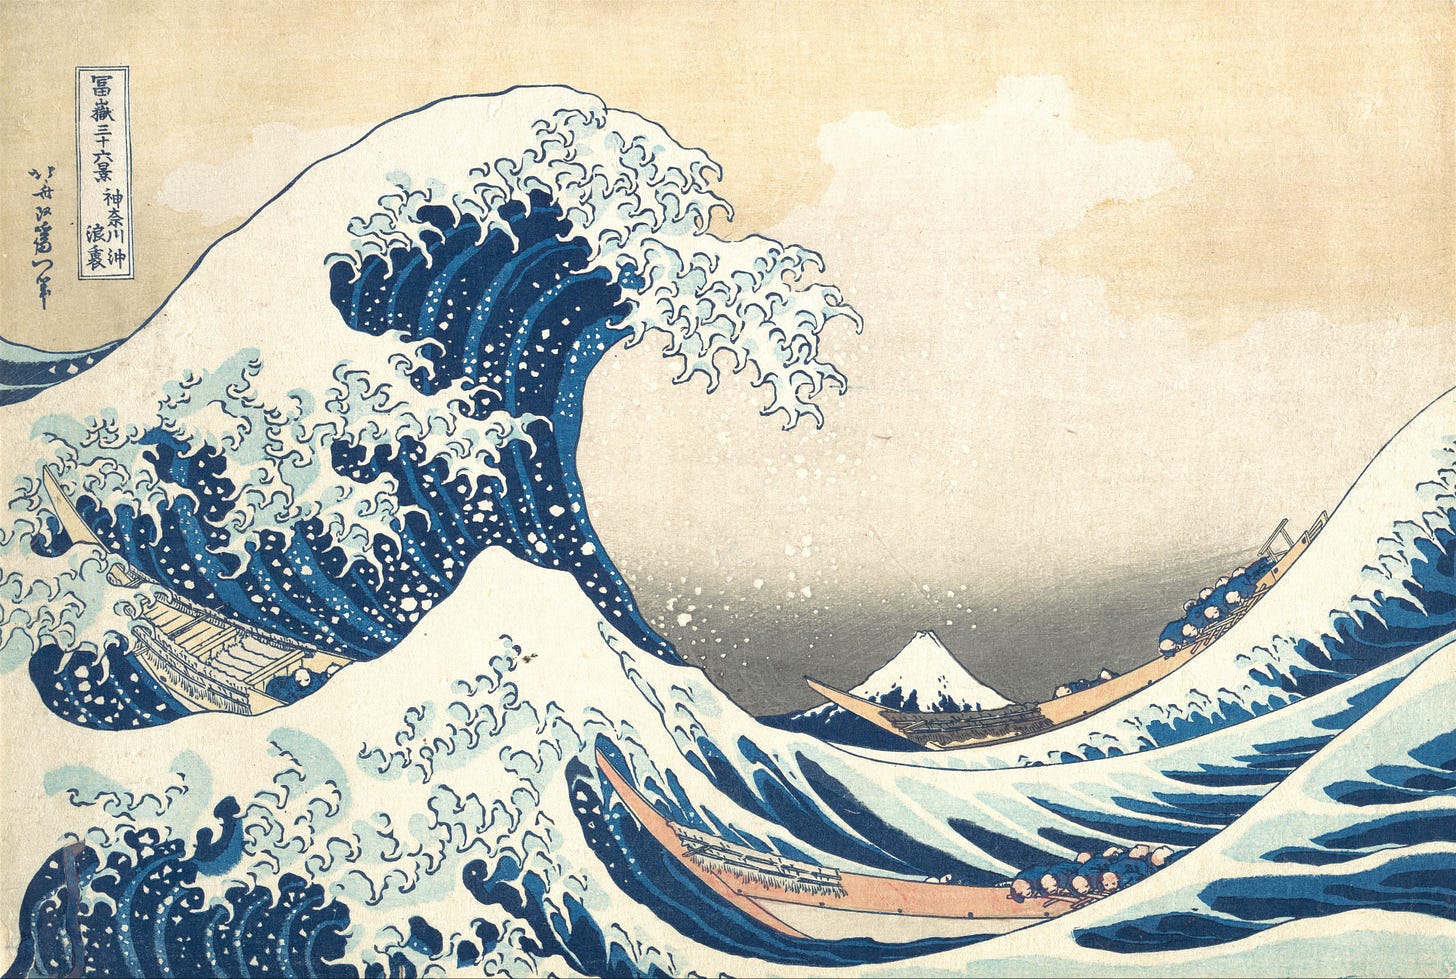 https://upload.wikimedia.org/wikipedia/commons/a/a5/Tsunami_by_hokusai_19th_century.jpg